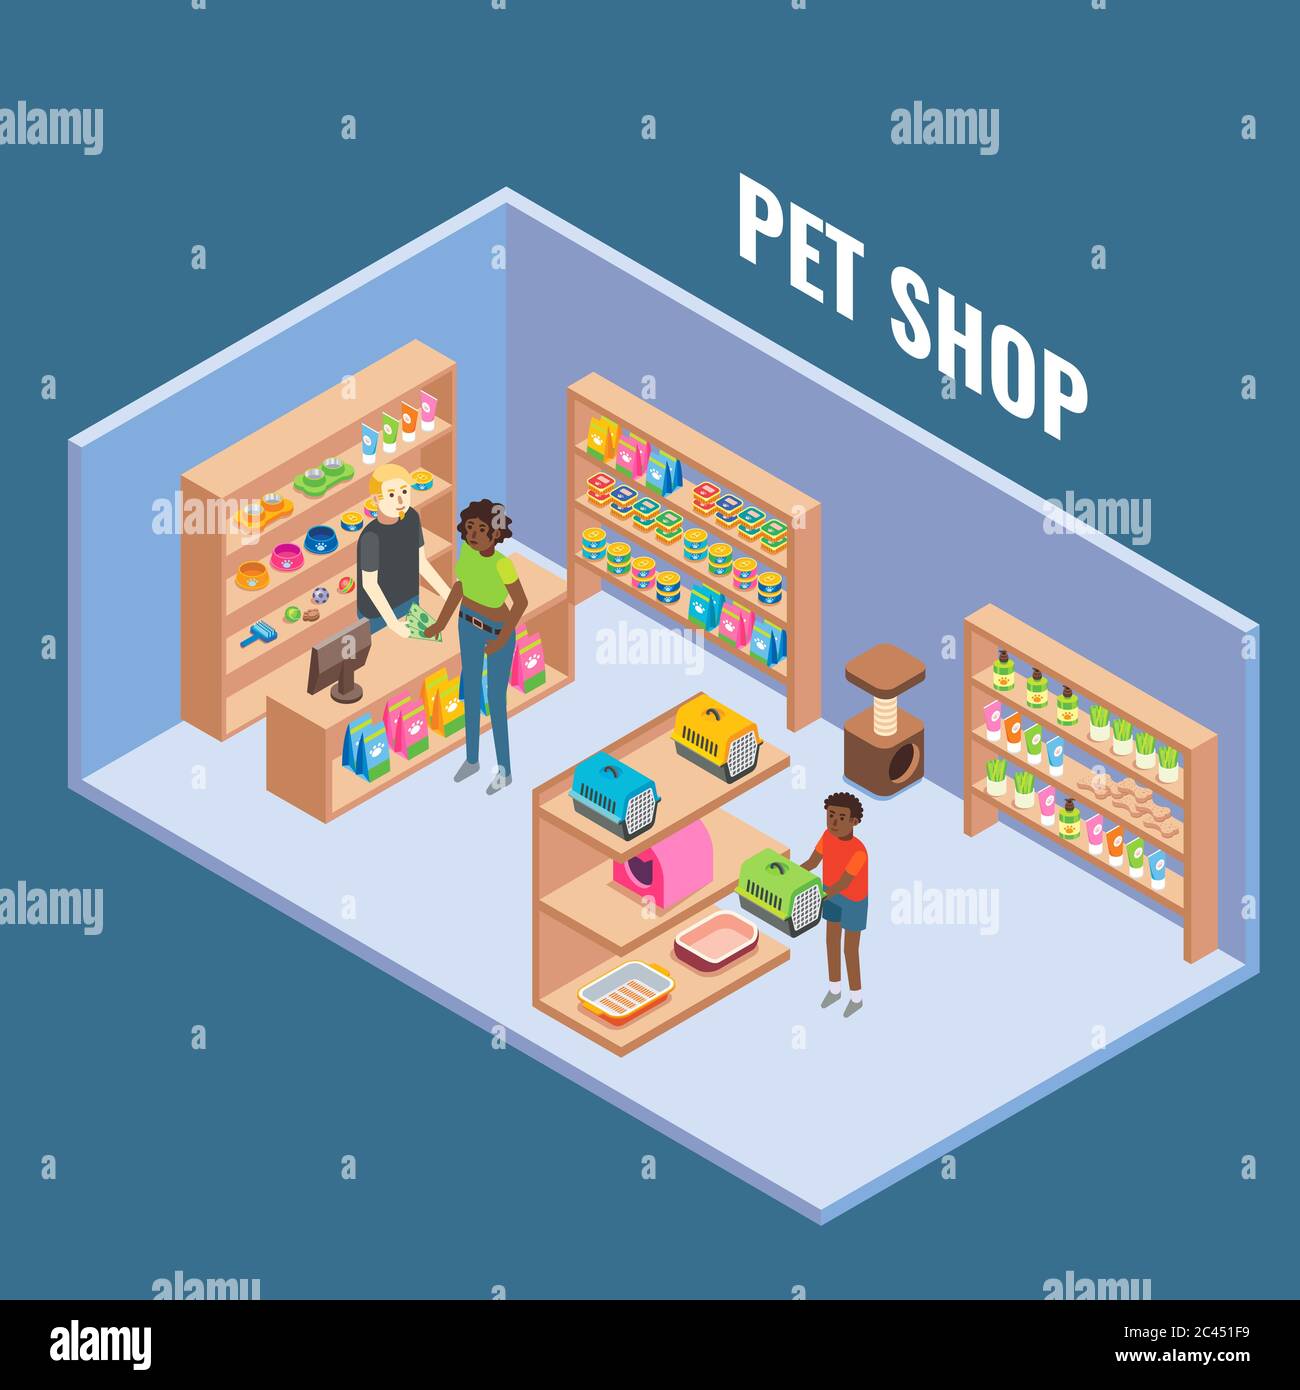 Pet shop cutaway interior vector flat isometric illustration Stock Vector